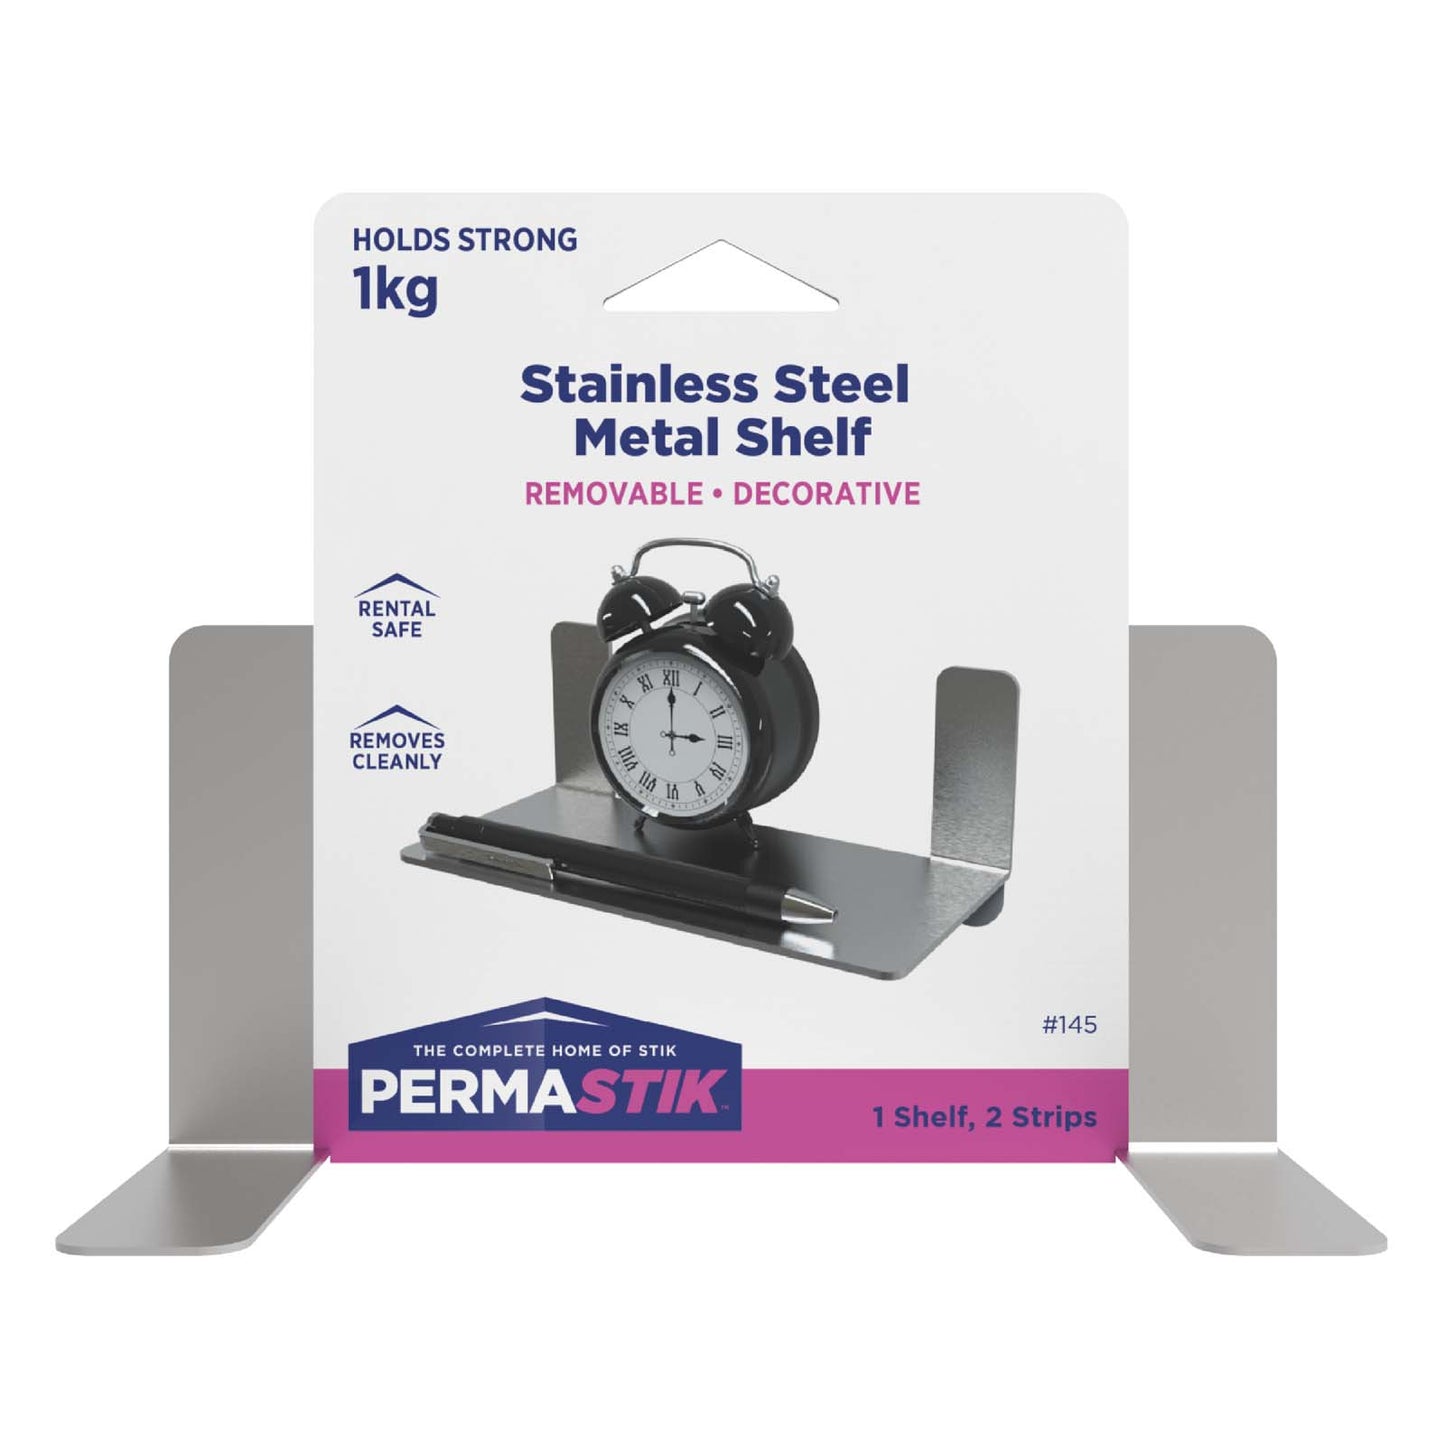 Stainless Steel Metal Shelf